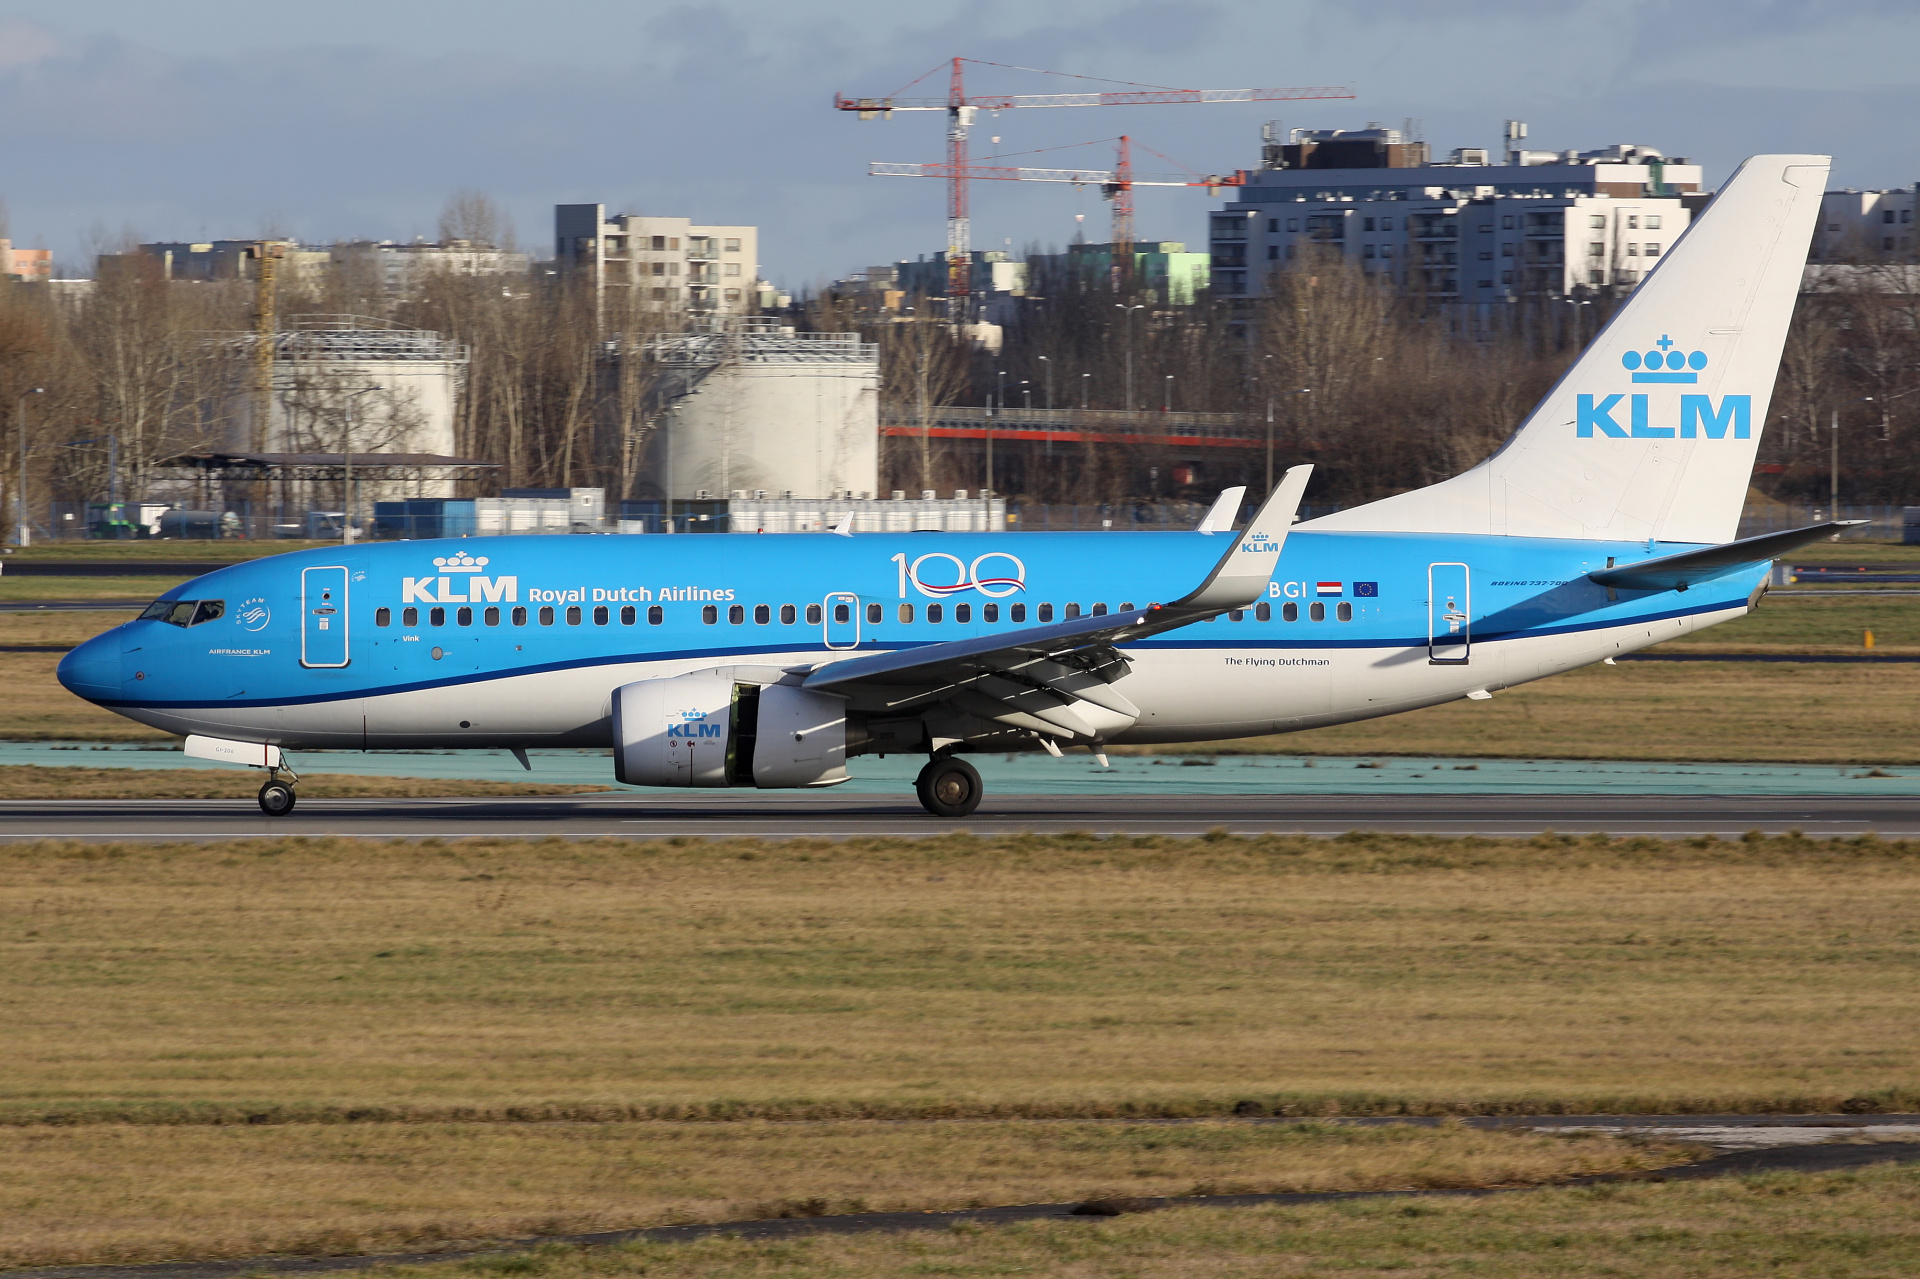 PH-BGI (100 years livery) (Aircraft » EPWA Spotting » Boeing 737-700 » KLM Royal Dutch Airlines)